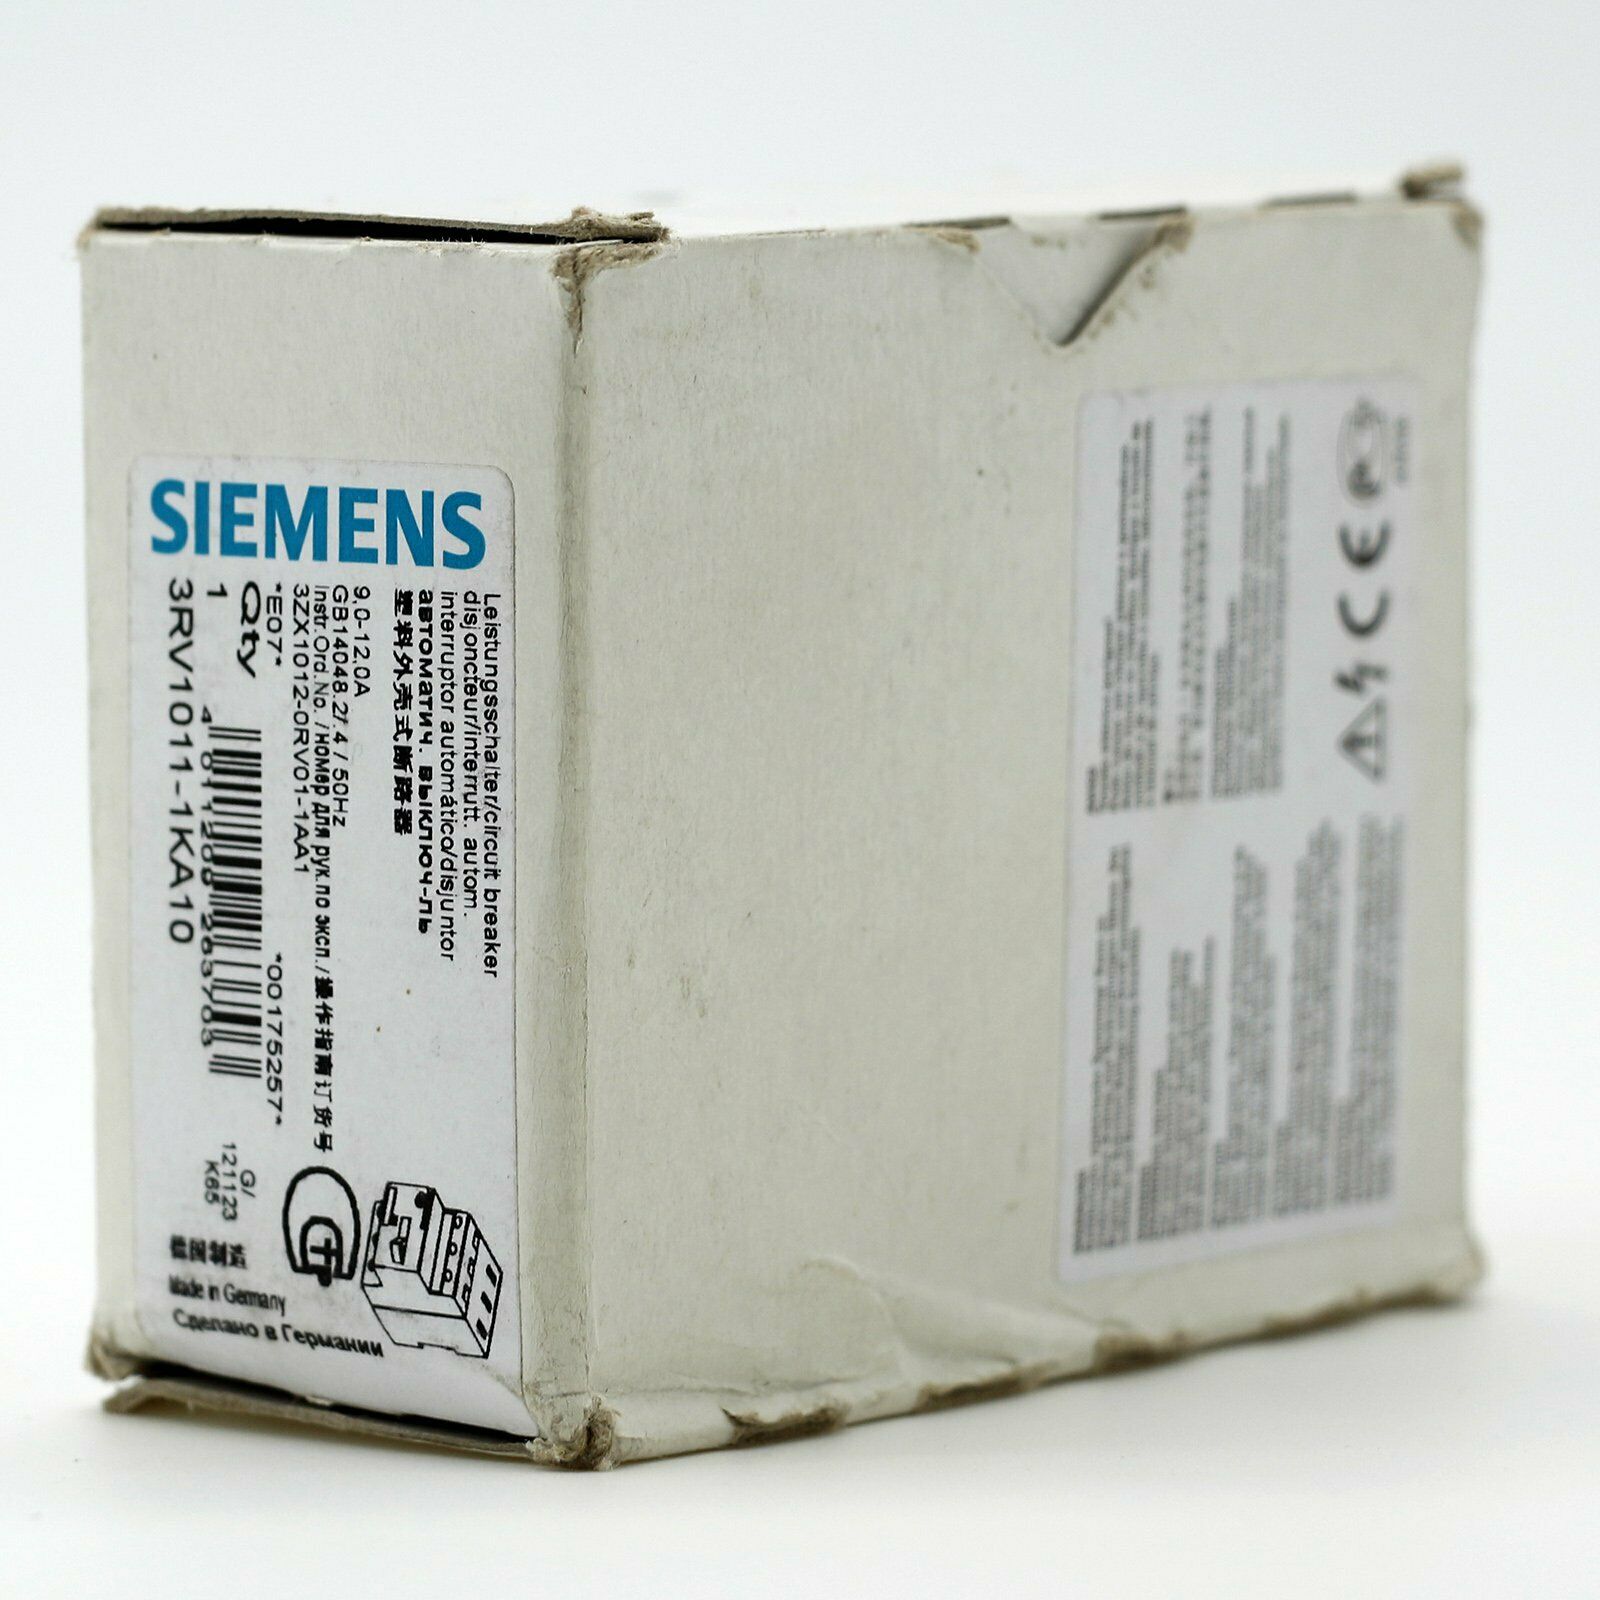 1PCS New IN BOX Siemens Contactor 3RV1011-1KA10 3RV10111KA10 One year warranty KOEED 1, 90%, import_2020_10_10_031751, Other, Siemens